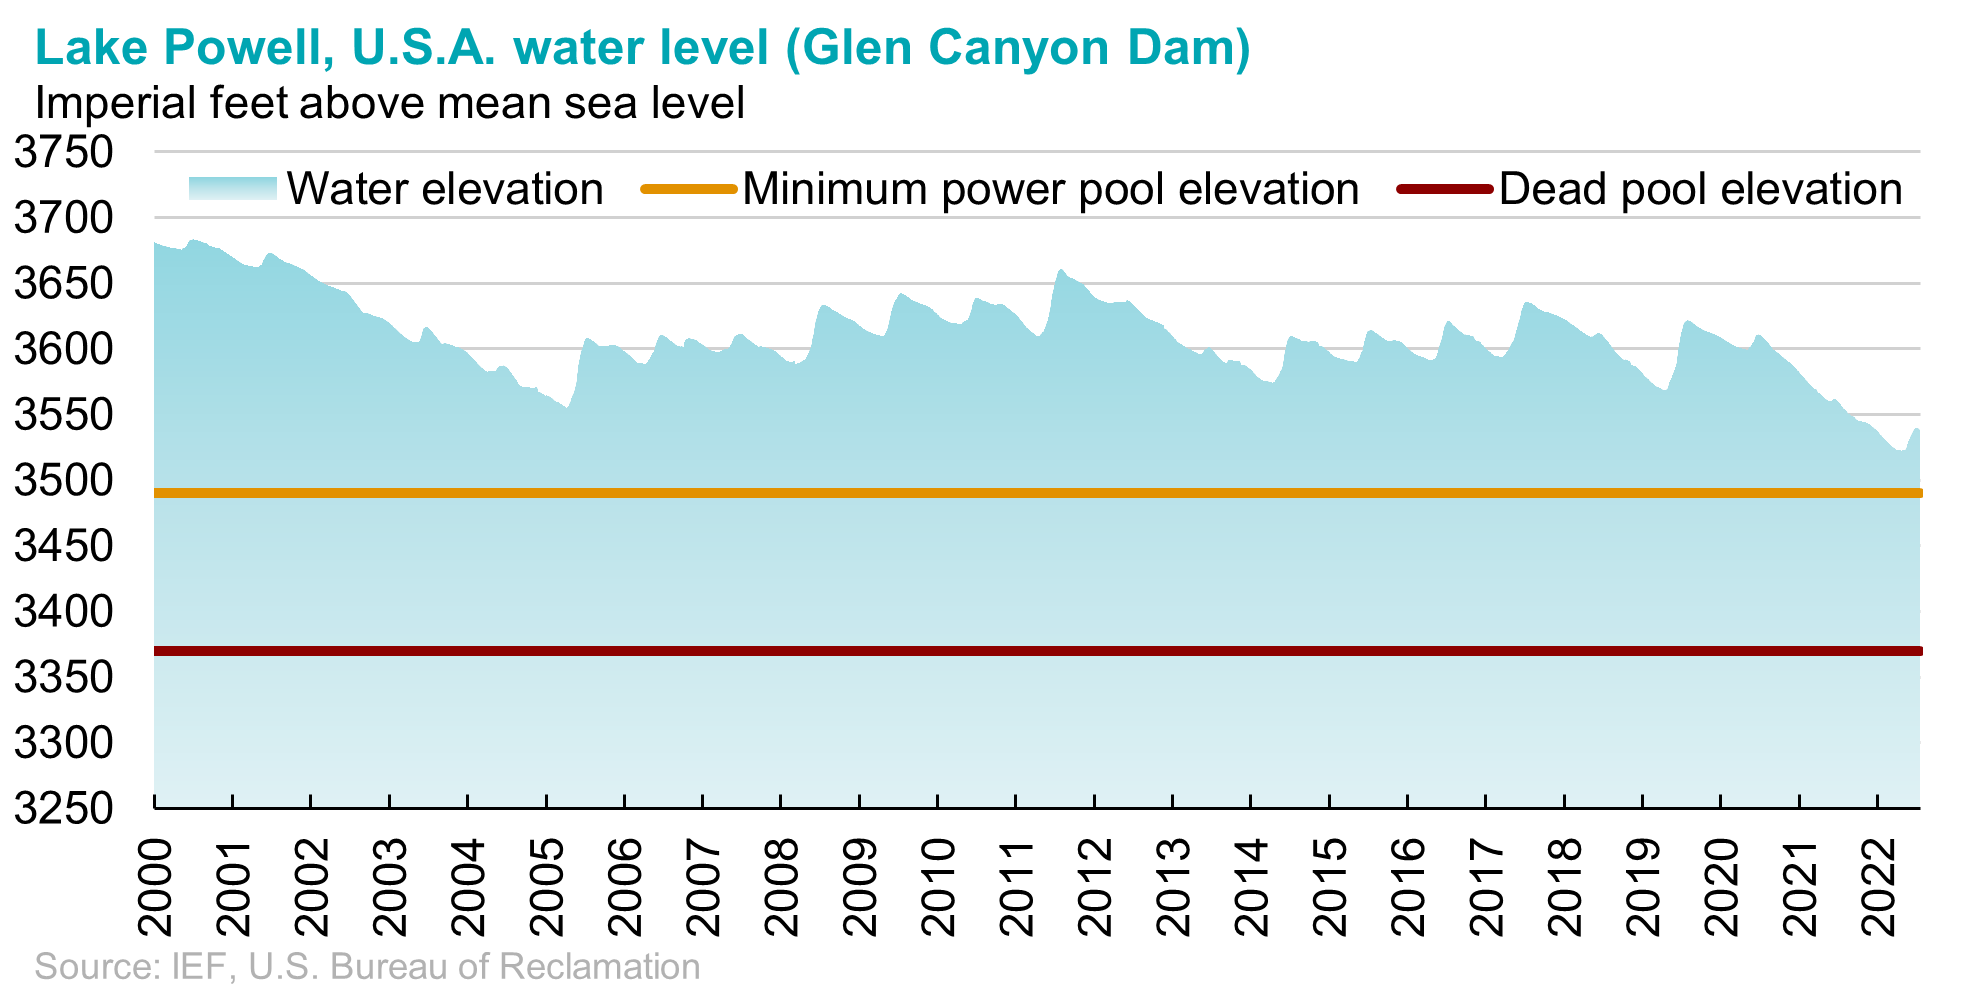 Lake Powell, U.S.A water level (Glen Canyon Dam)